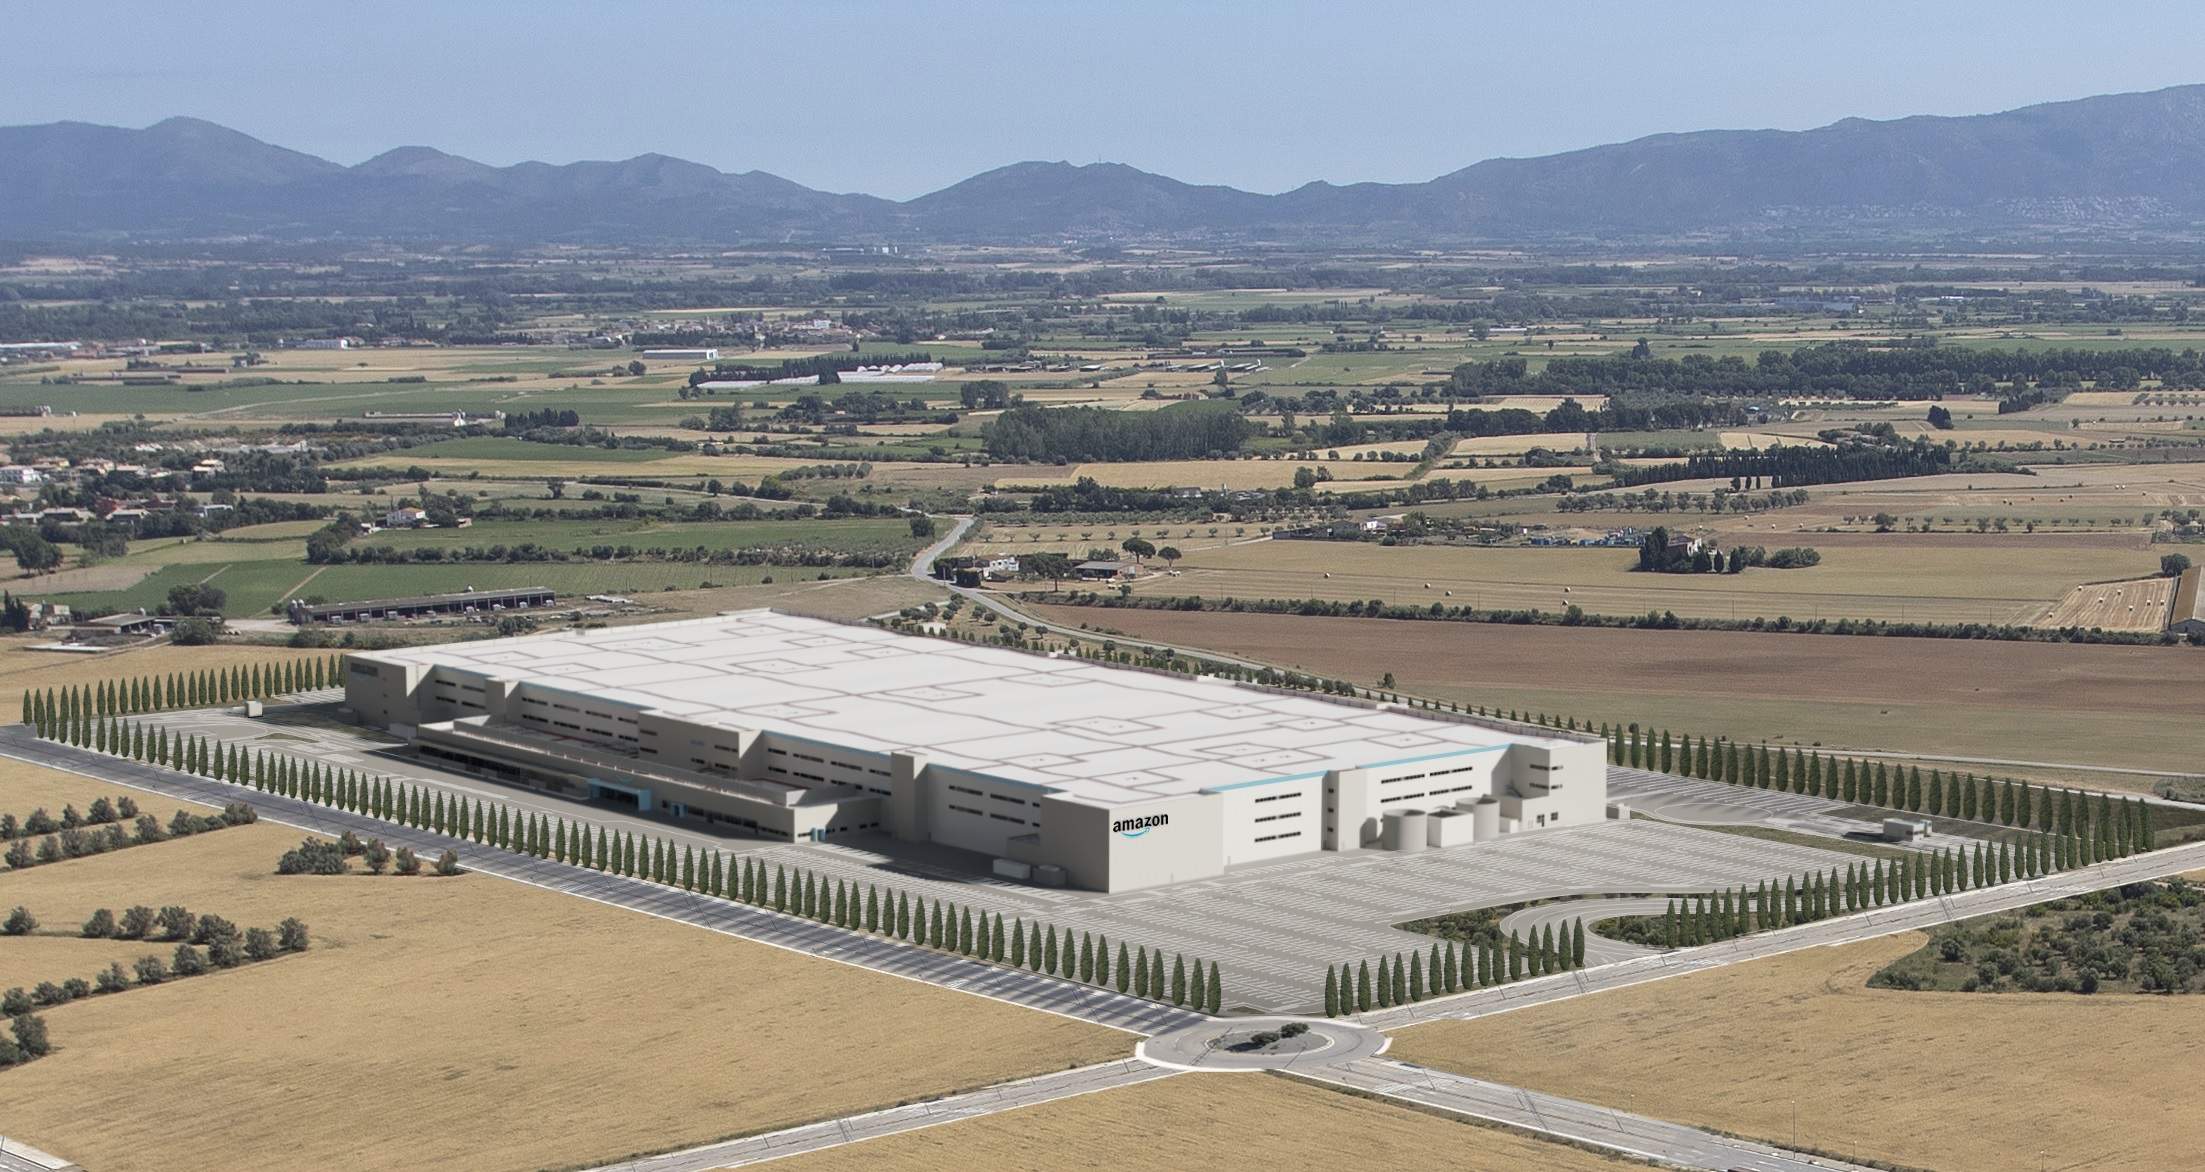 El centro logístic d'Amazon a Girona incorporarà 150 persones a la plantilla actual de 1.500 empleats